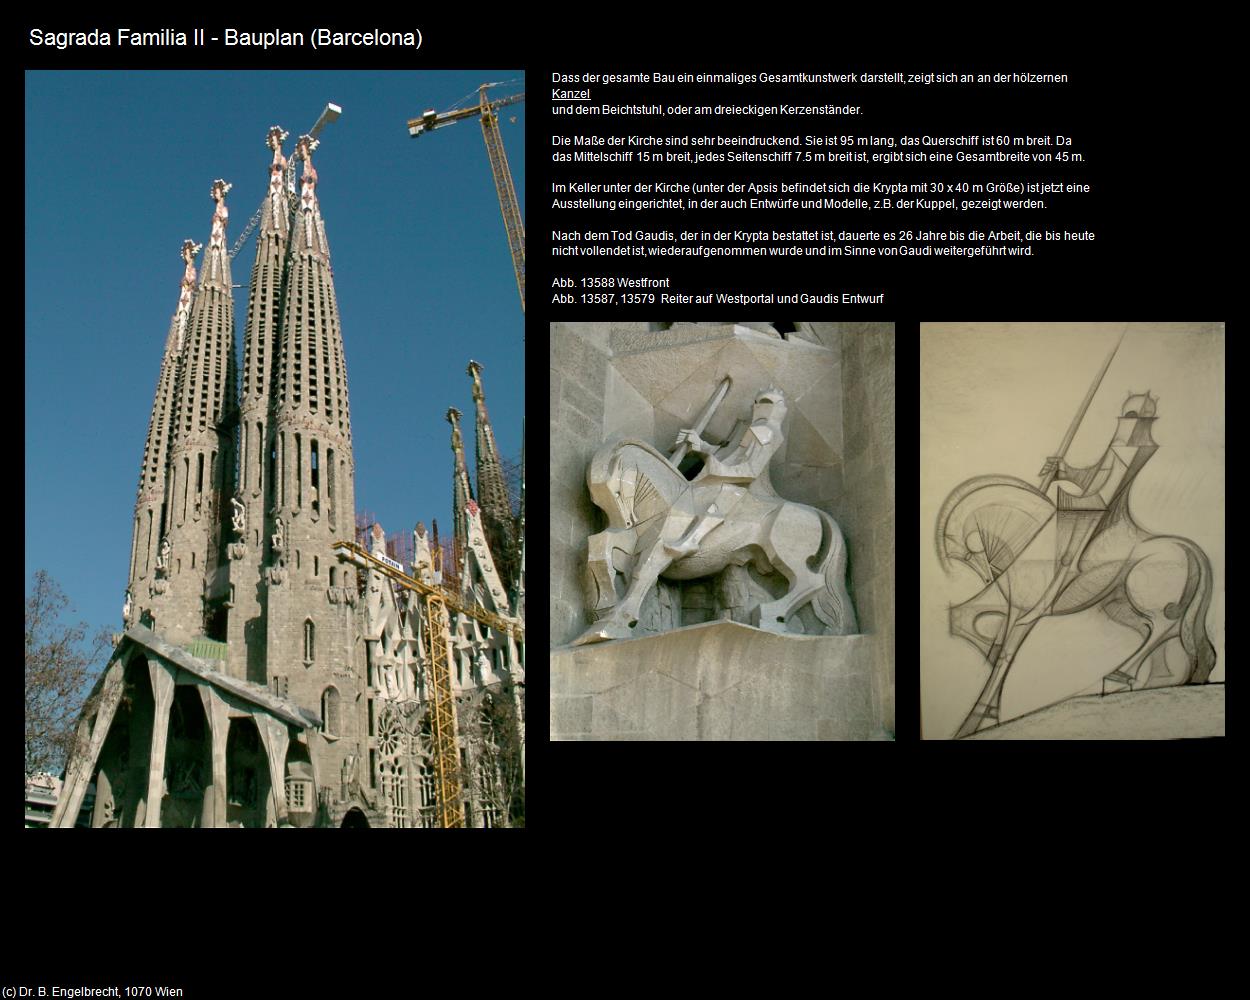 Sagrada Familia II (Barcelona) in KATALONIEN(c)B.Engelbrecht